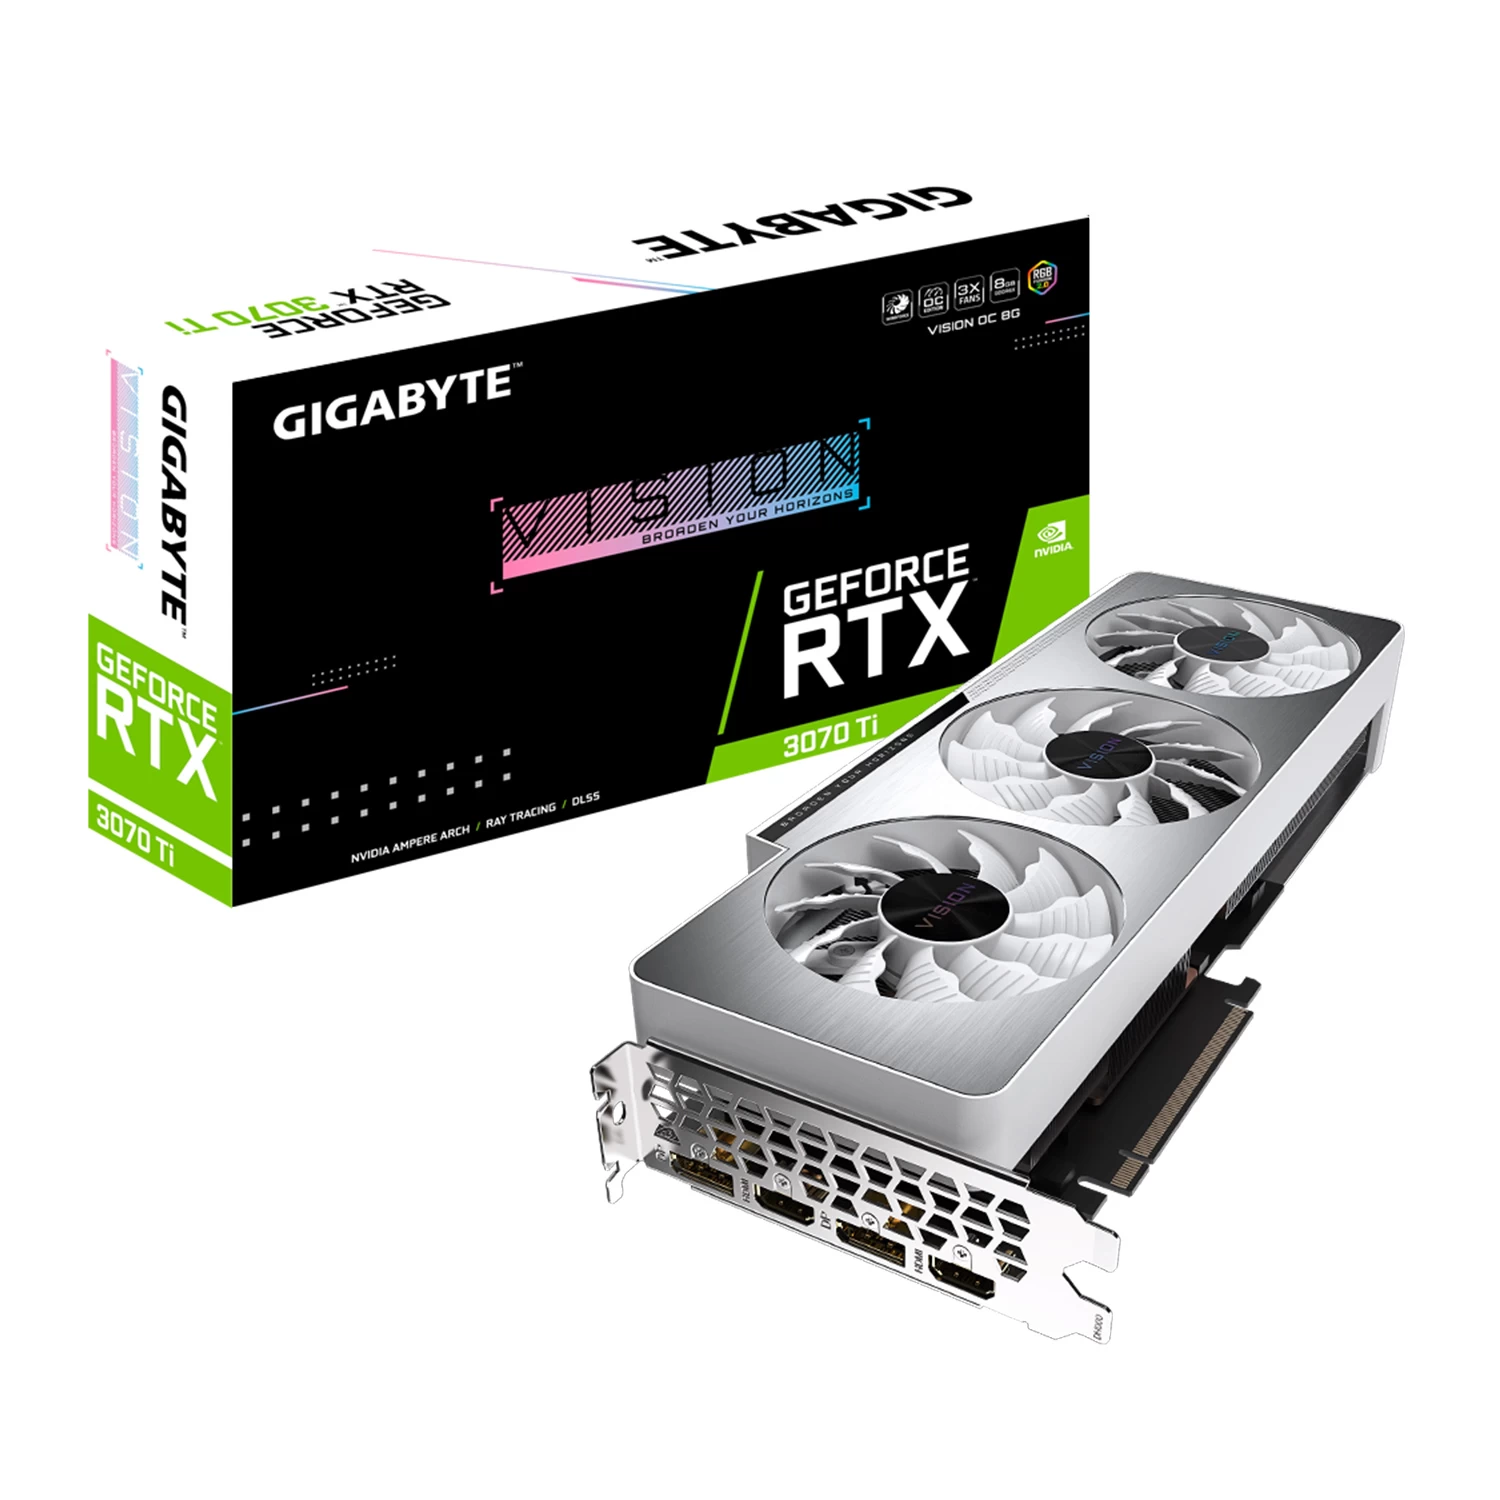 Gigabyte GeForce RTX 3070 Ti VISION OC 8G Package